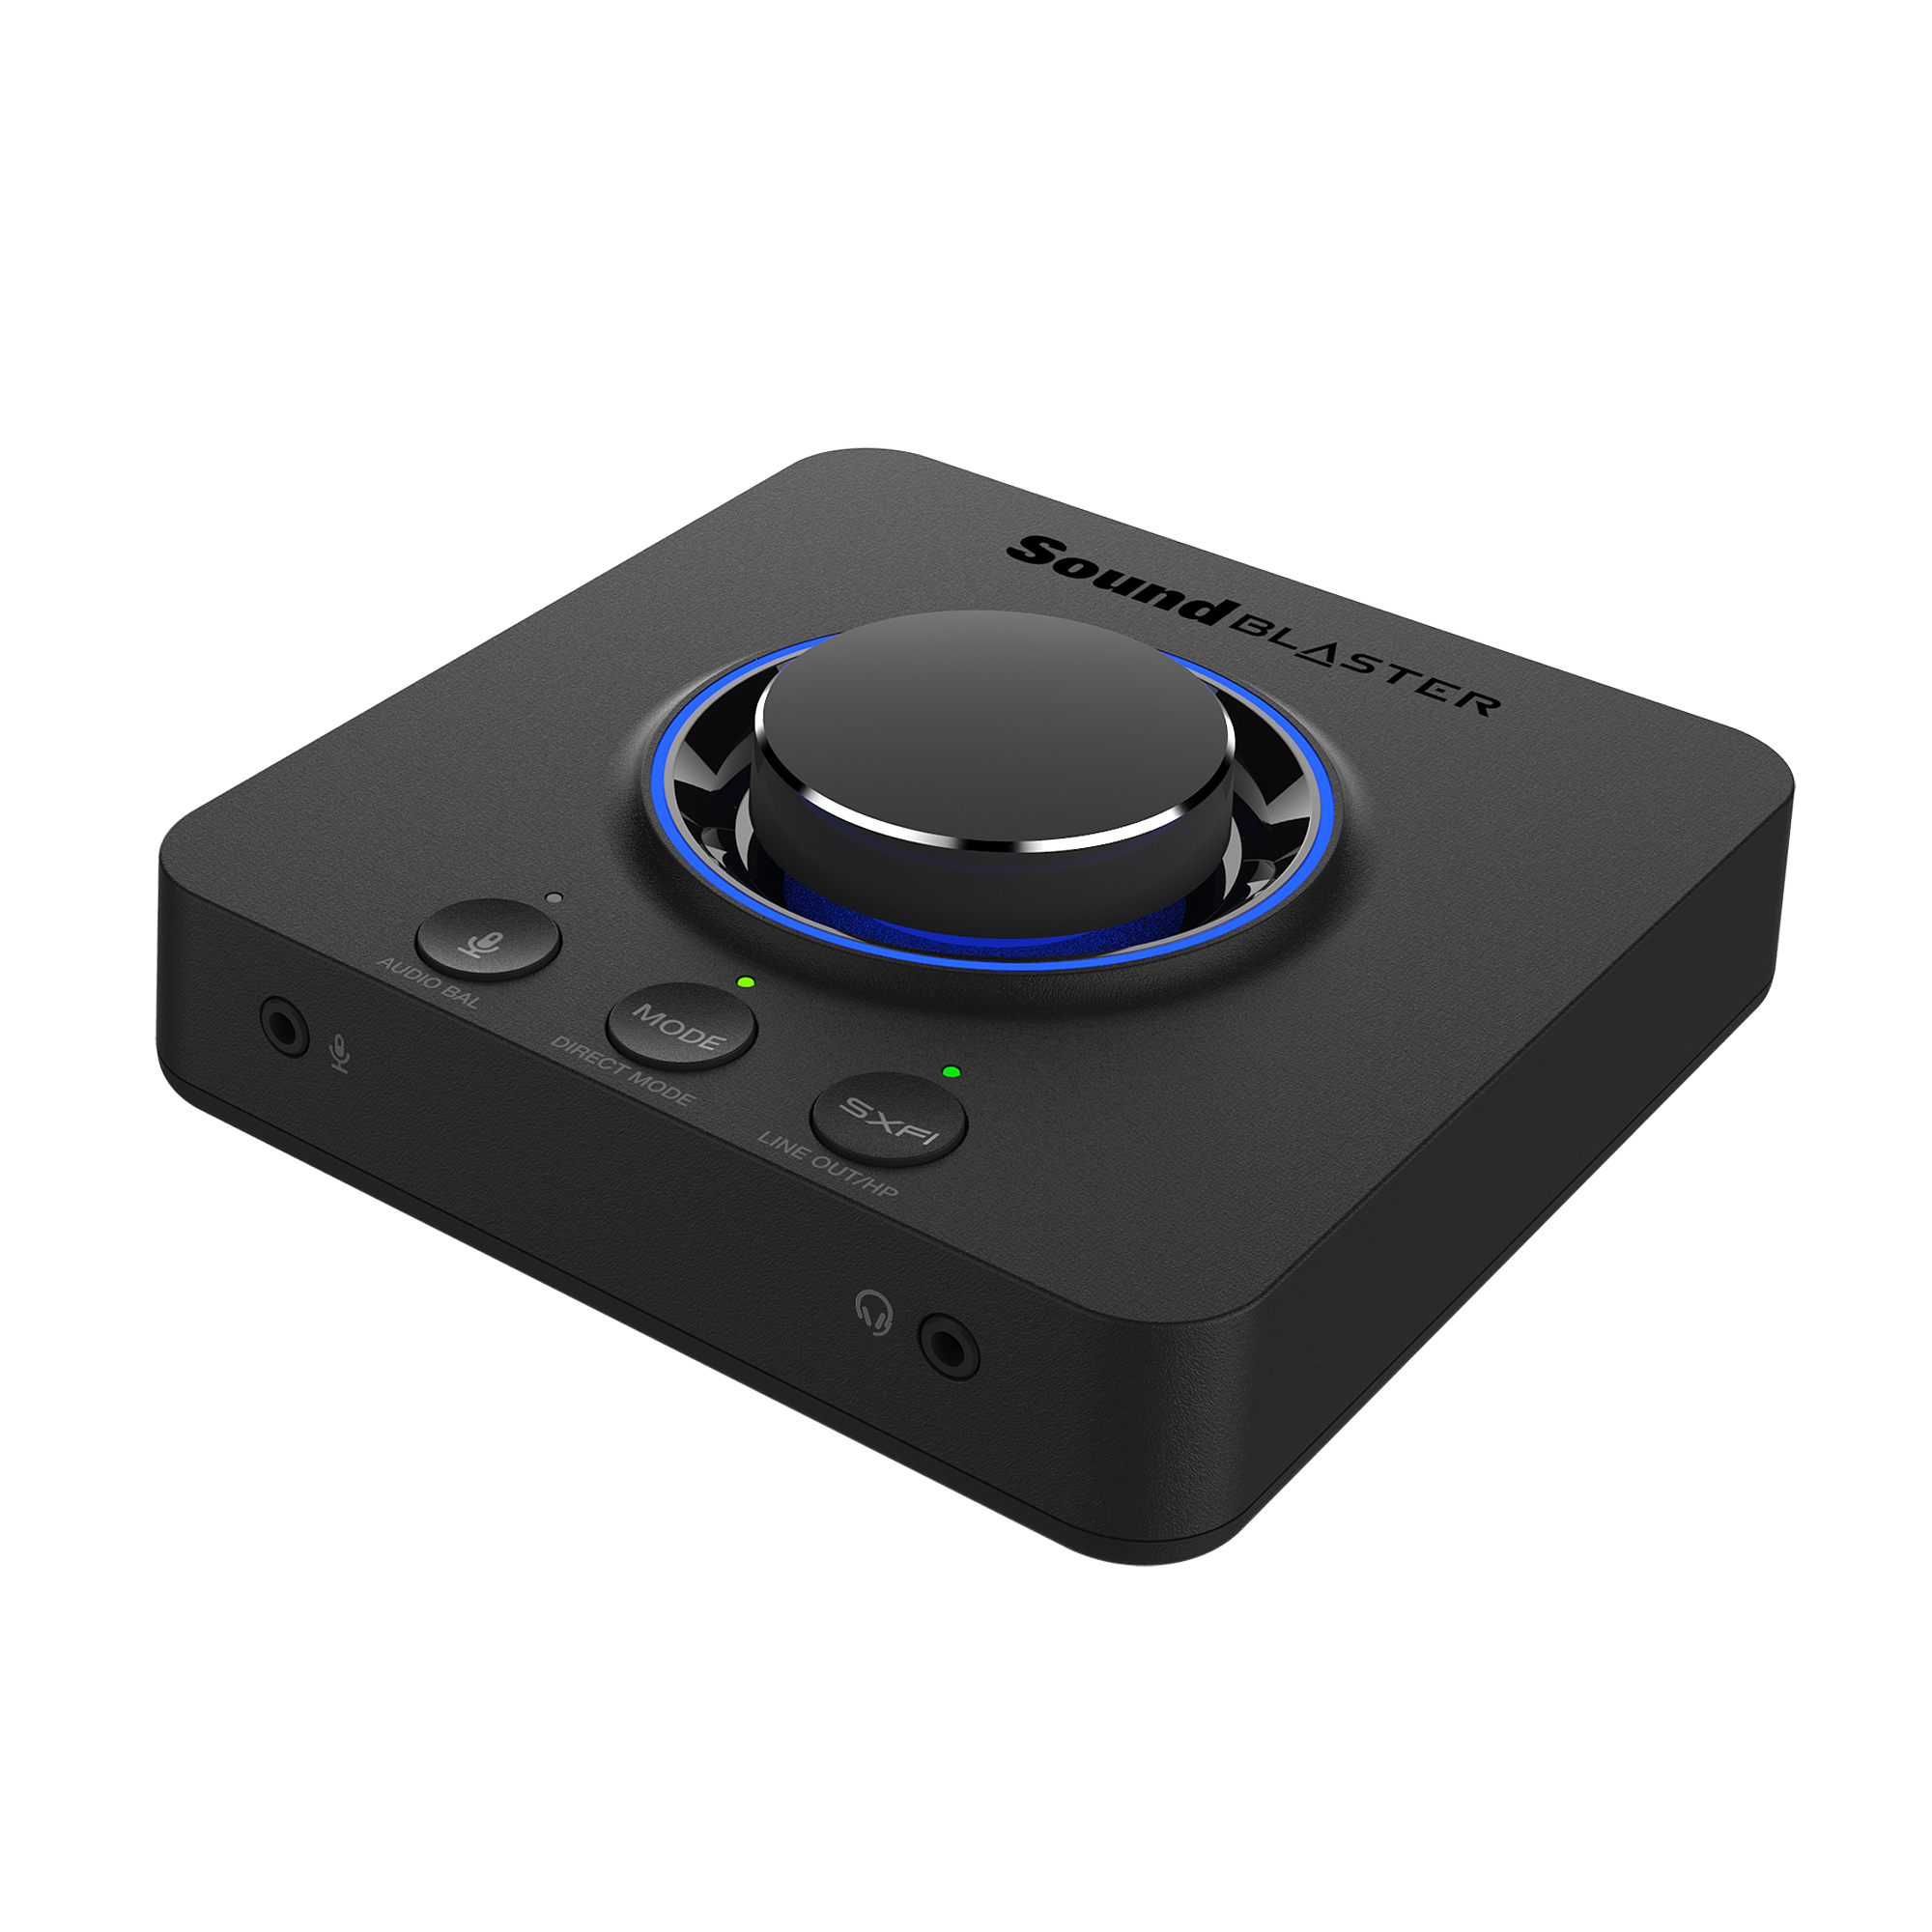 Sound Blaster X5   Hi res External Dual DAC USB Sound Card with